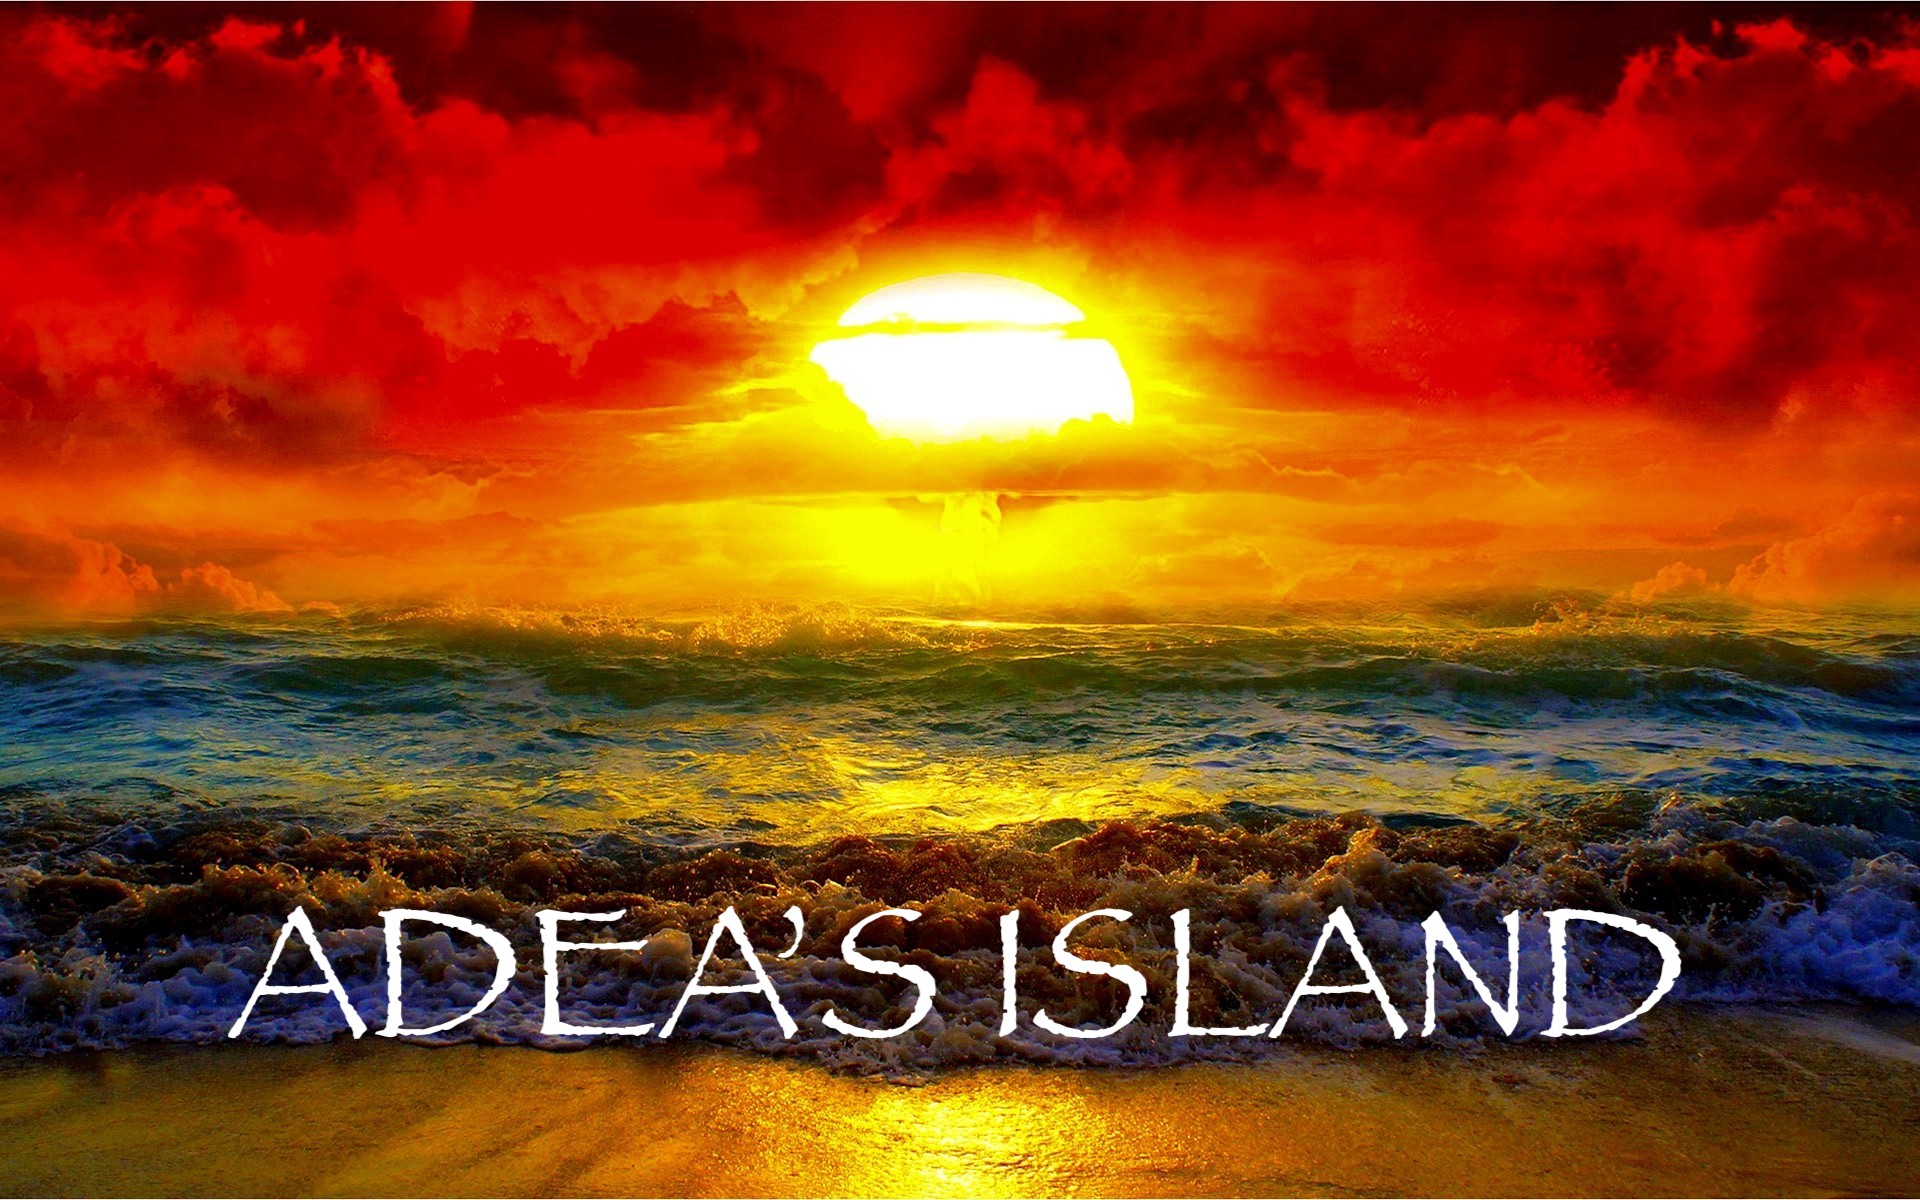 ADEA’S ISLAND